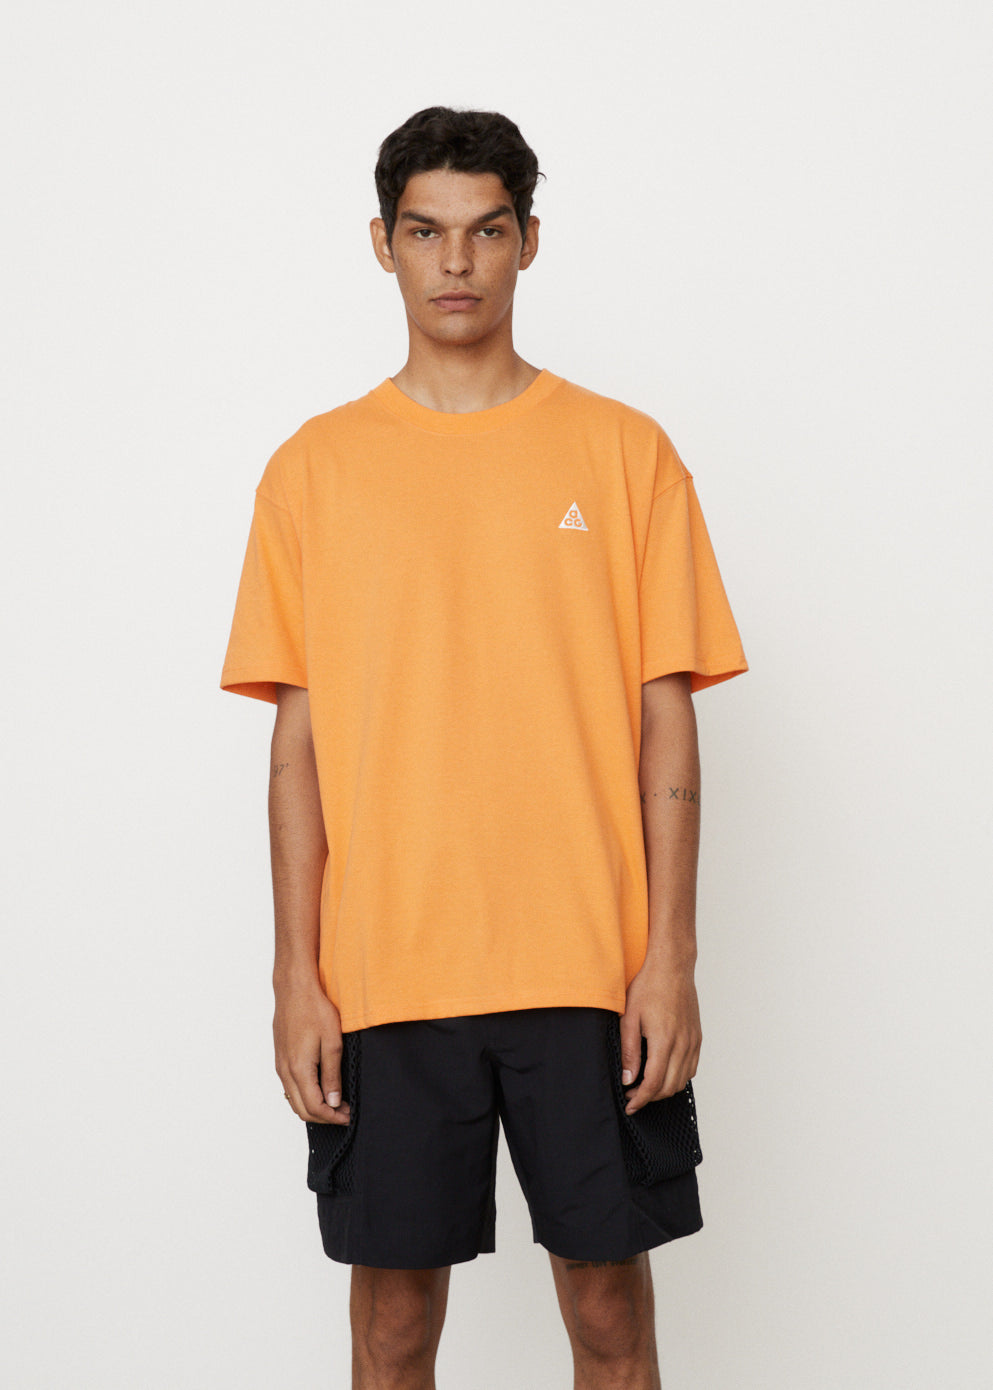 Men's Nike x Drake NOCTA Basketball Short Sleeve T-Shirt DN0660